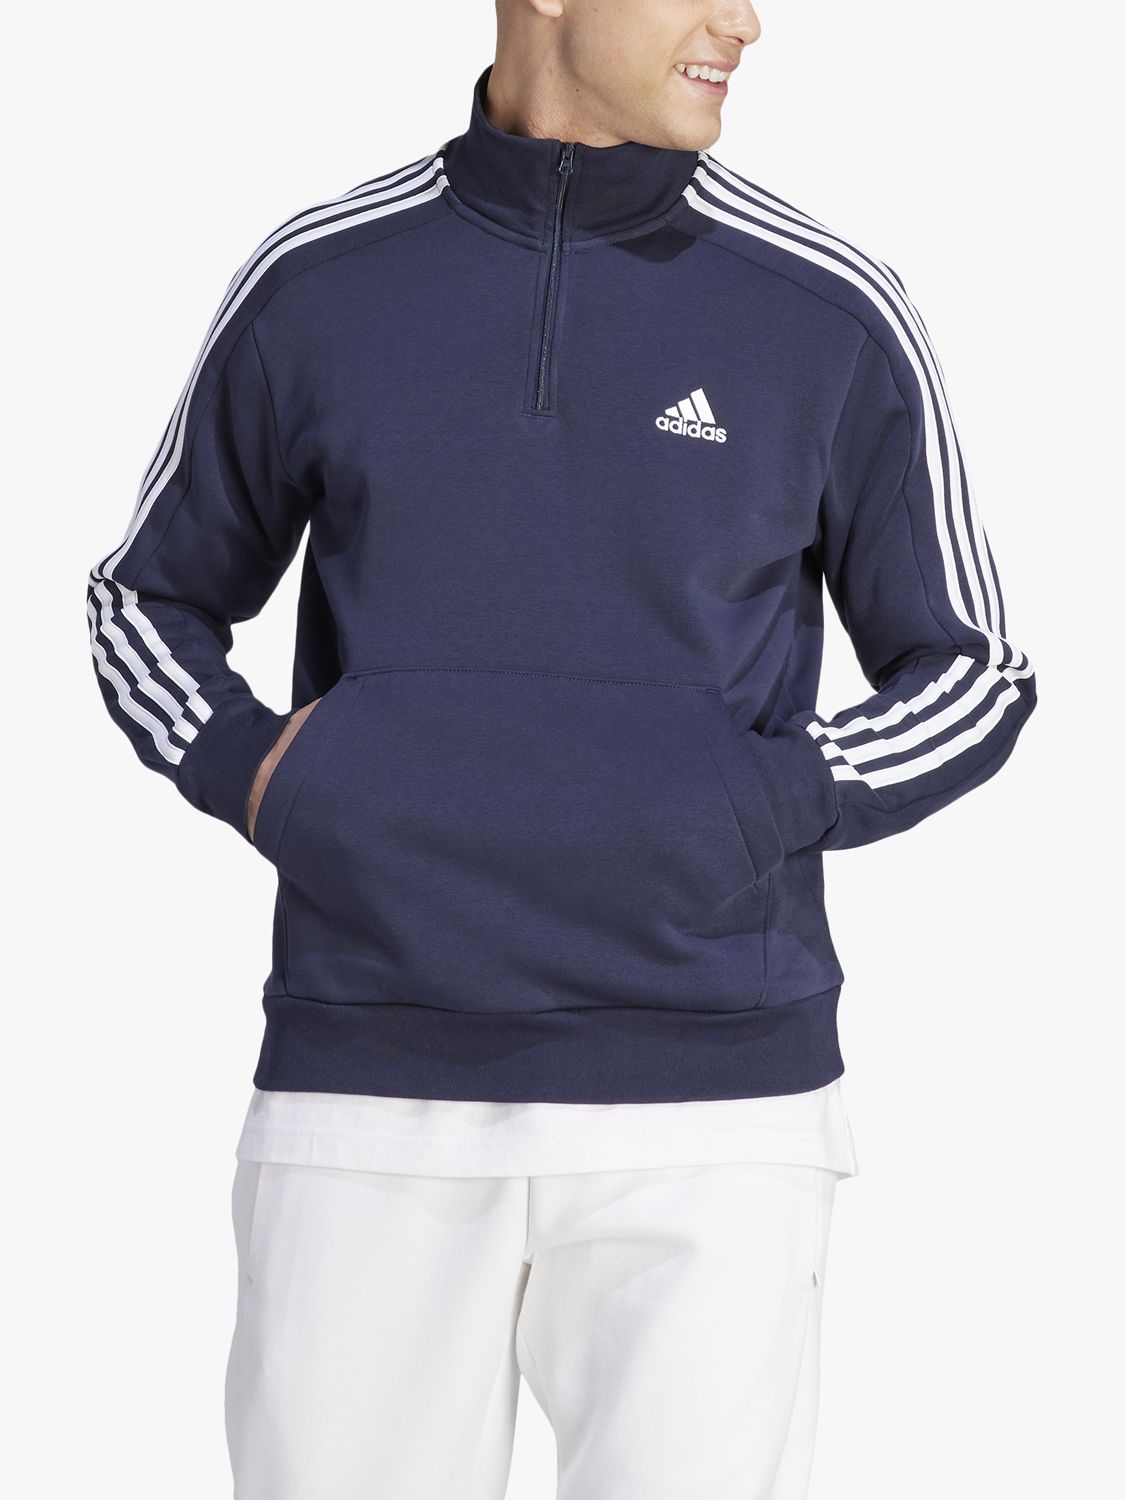 adidas 3-Stripes Fleece 1/4 Zip Sweatshirt, Legend Ink/White at